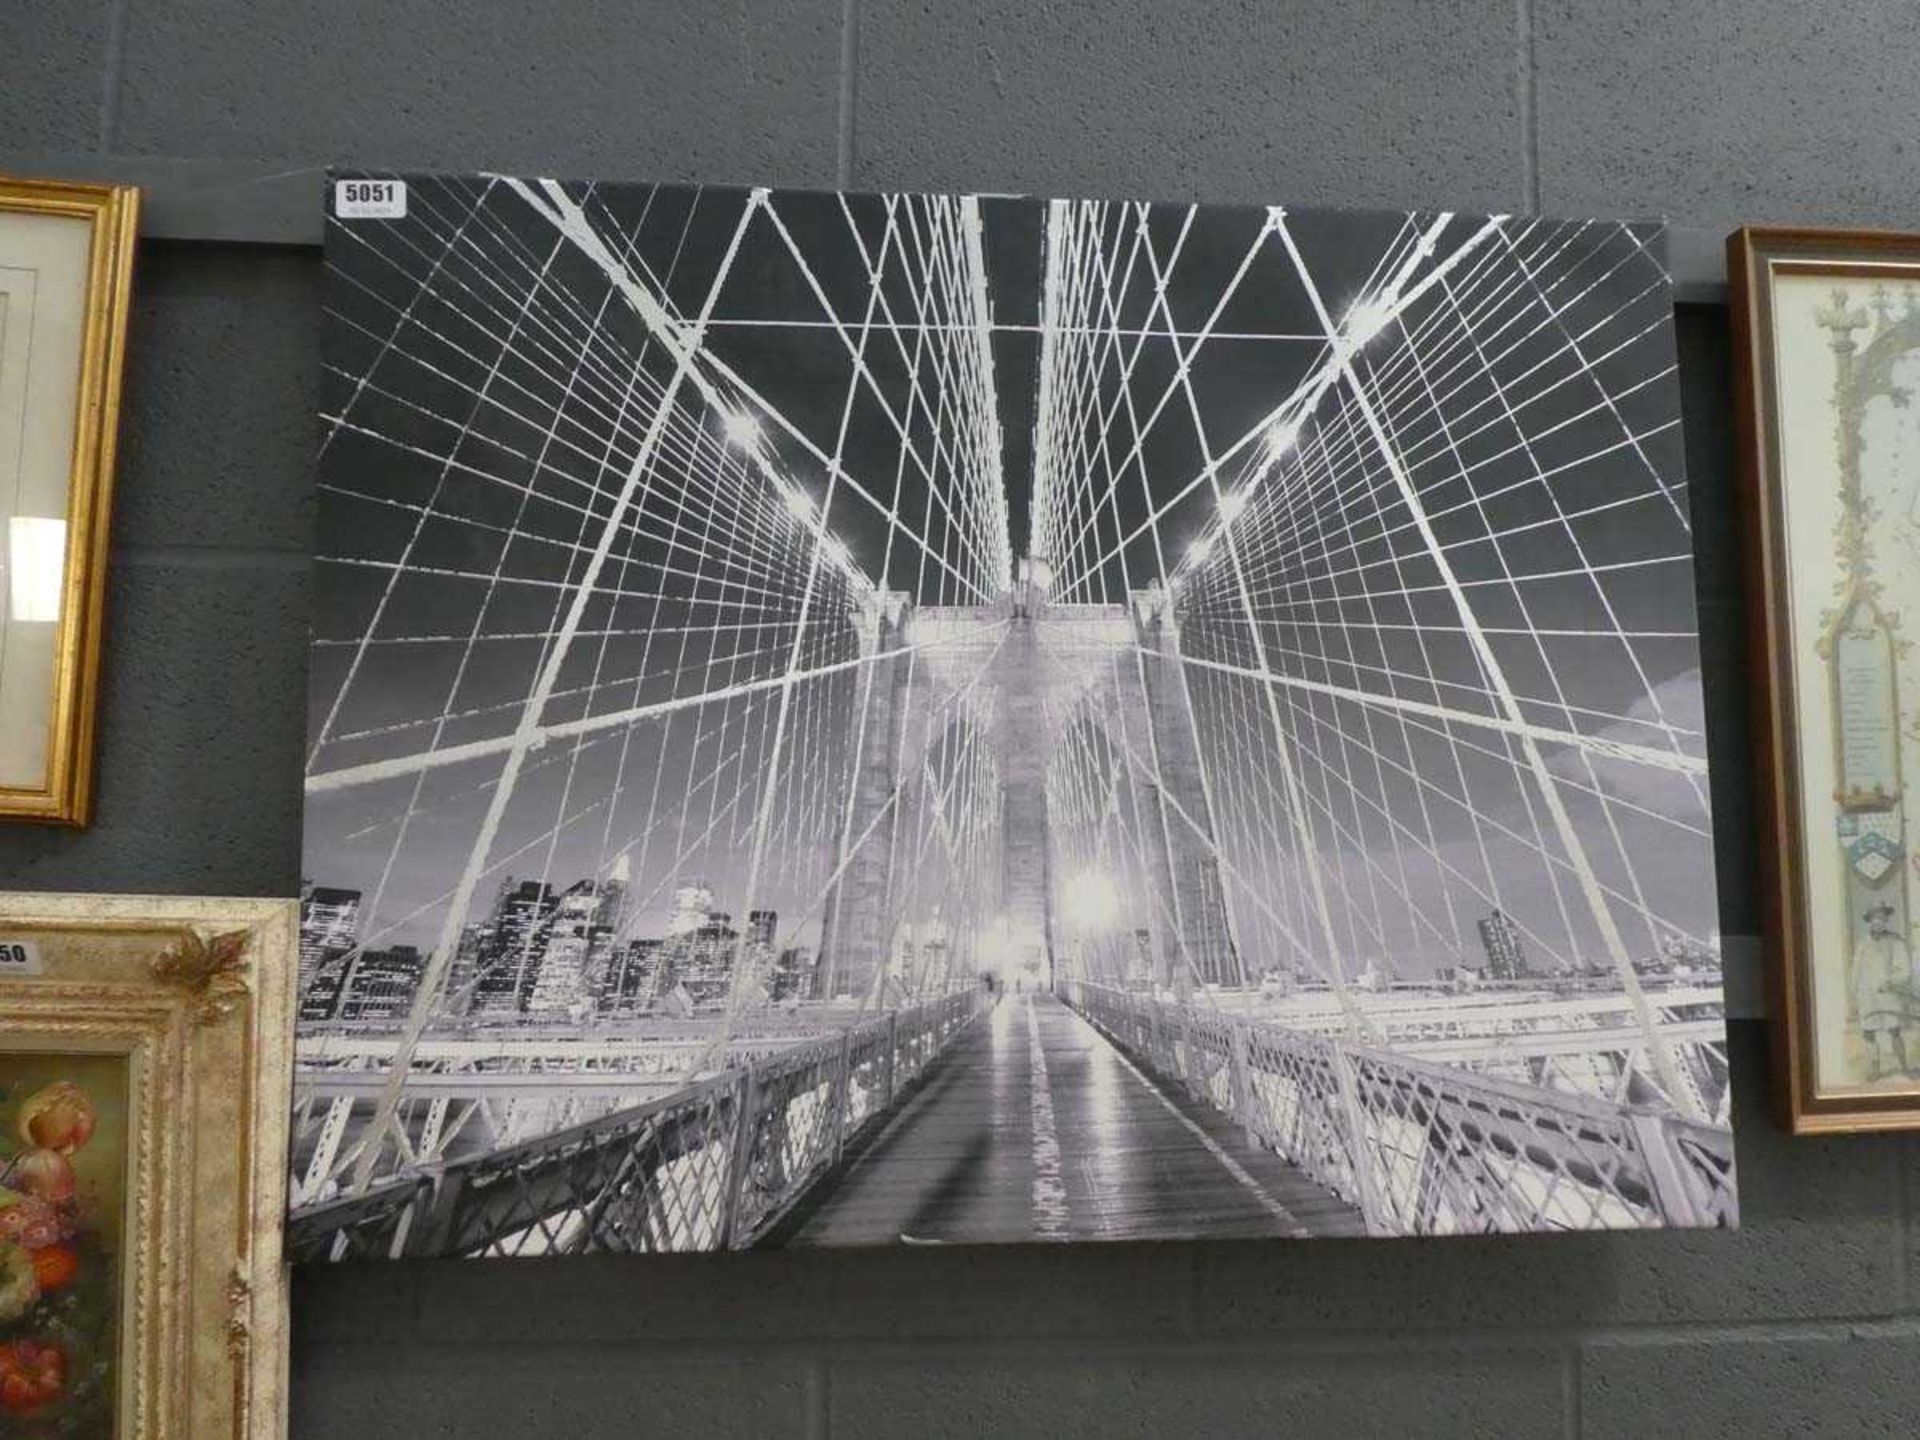 Black and white print of a bridge